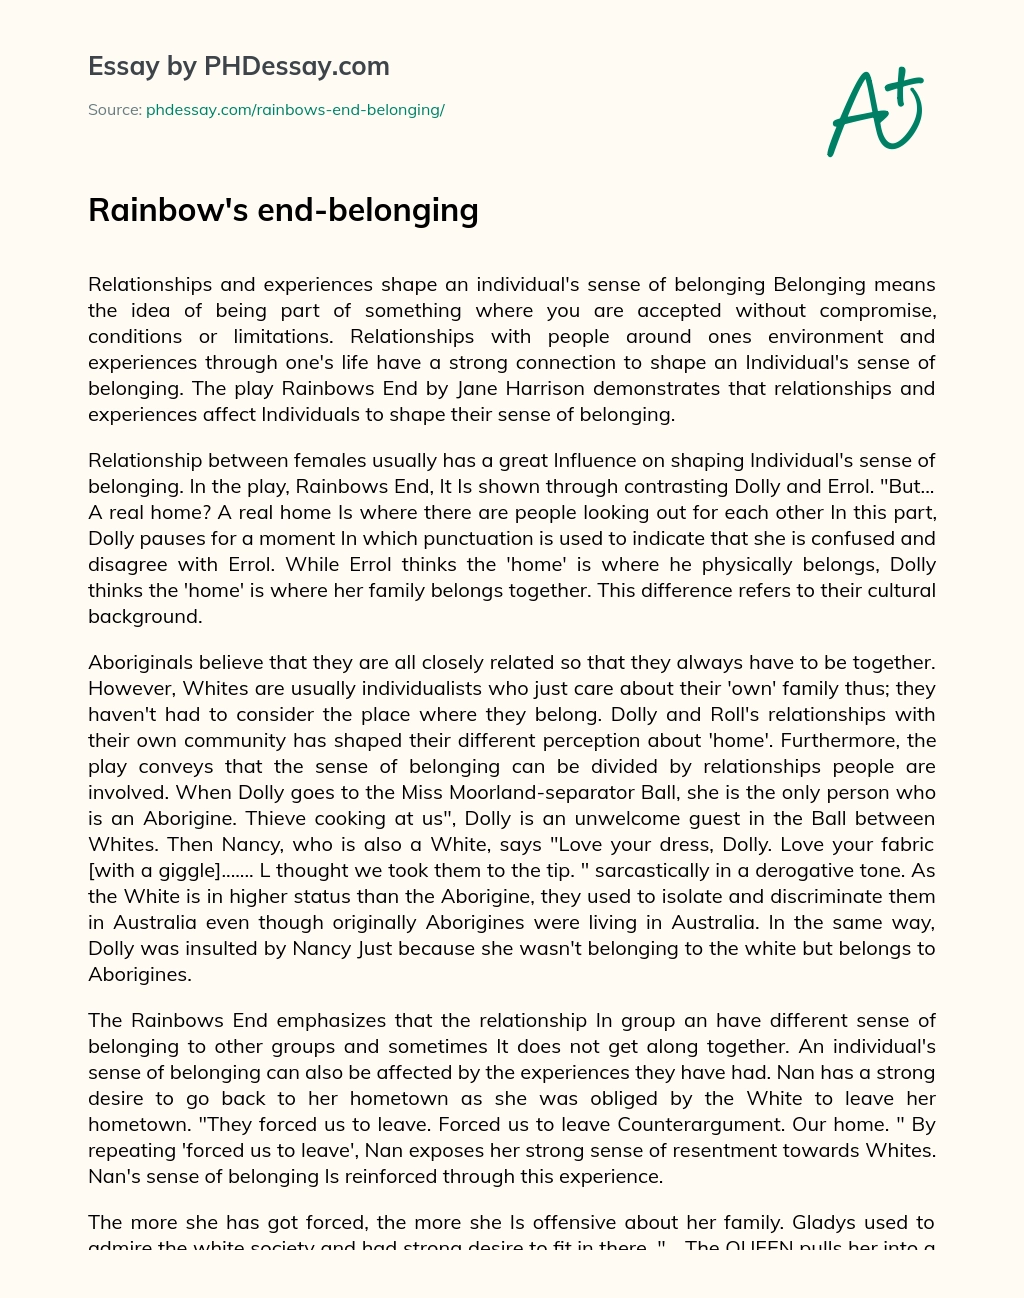 Rainbow’s end-belonging essay